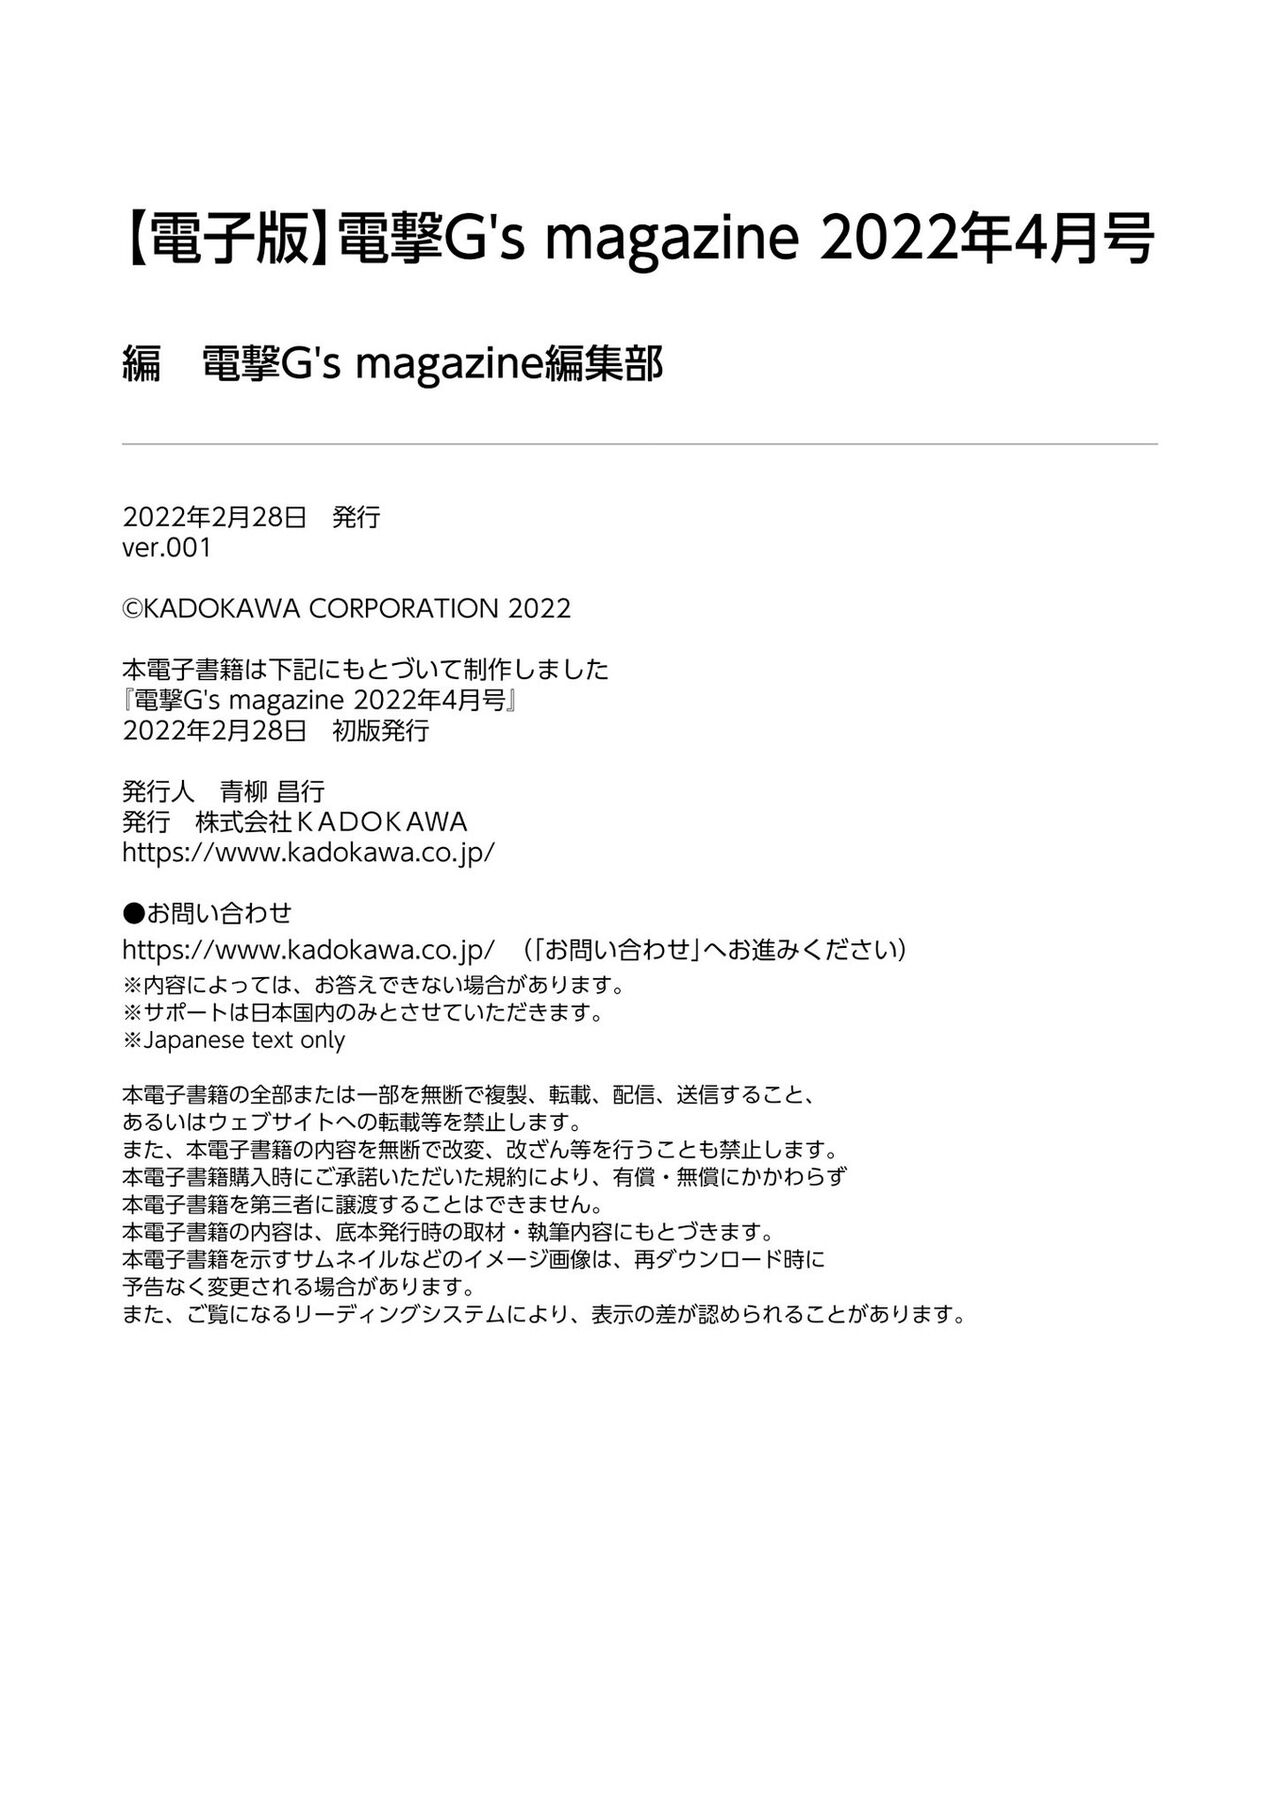 Dengeki G's Magazine #297 - April 2022 106